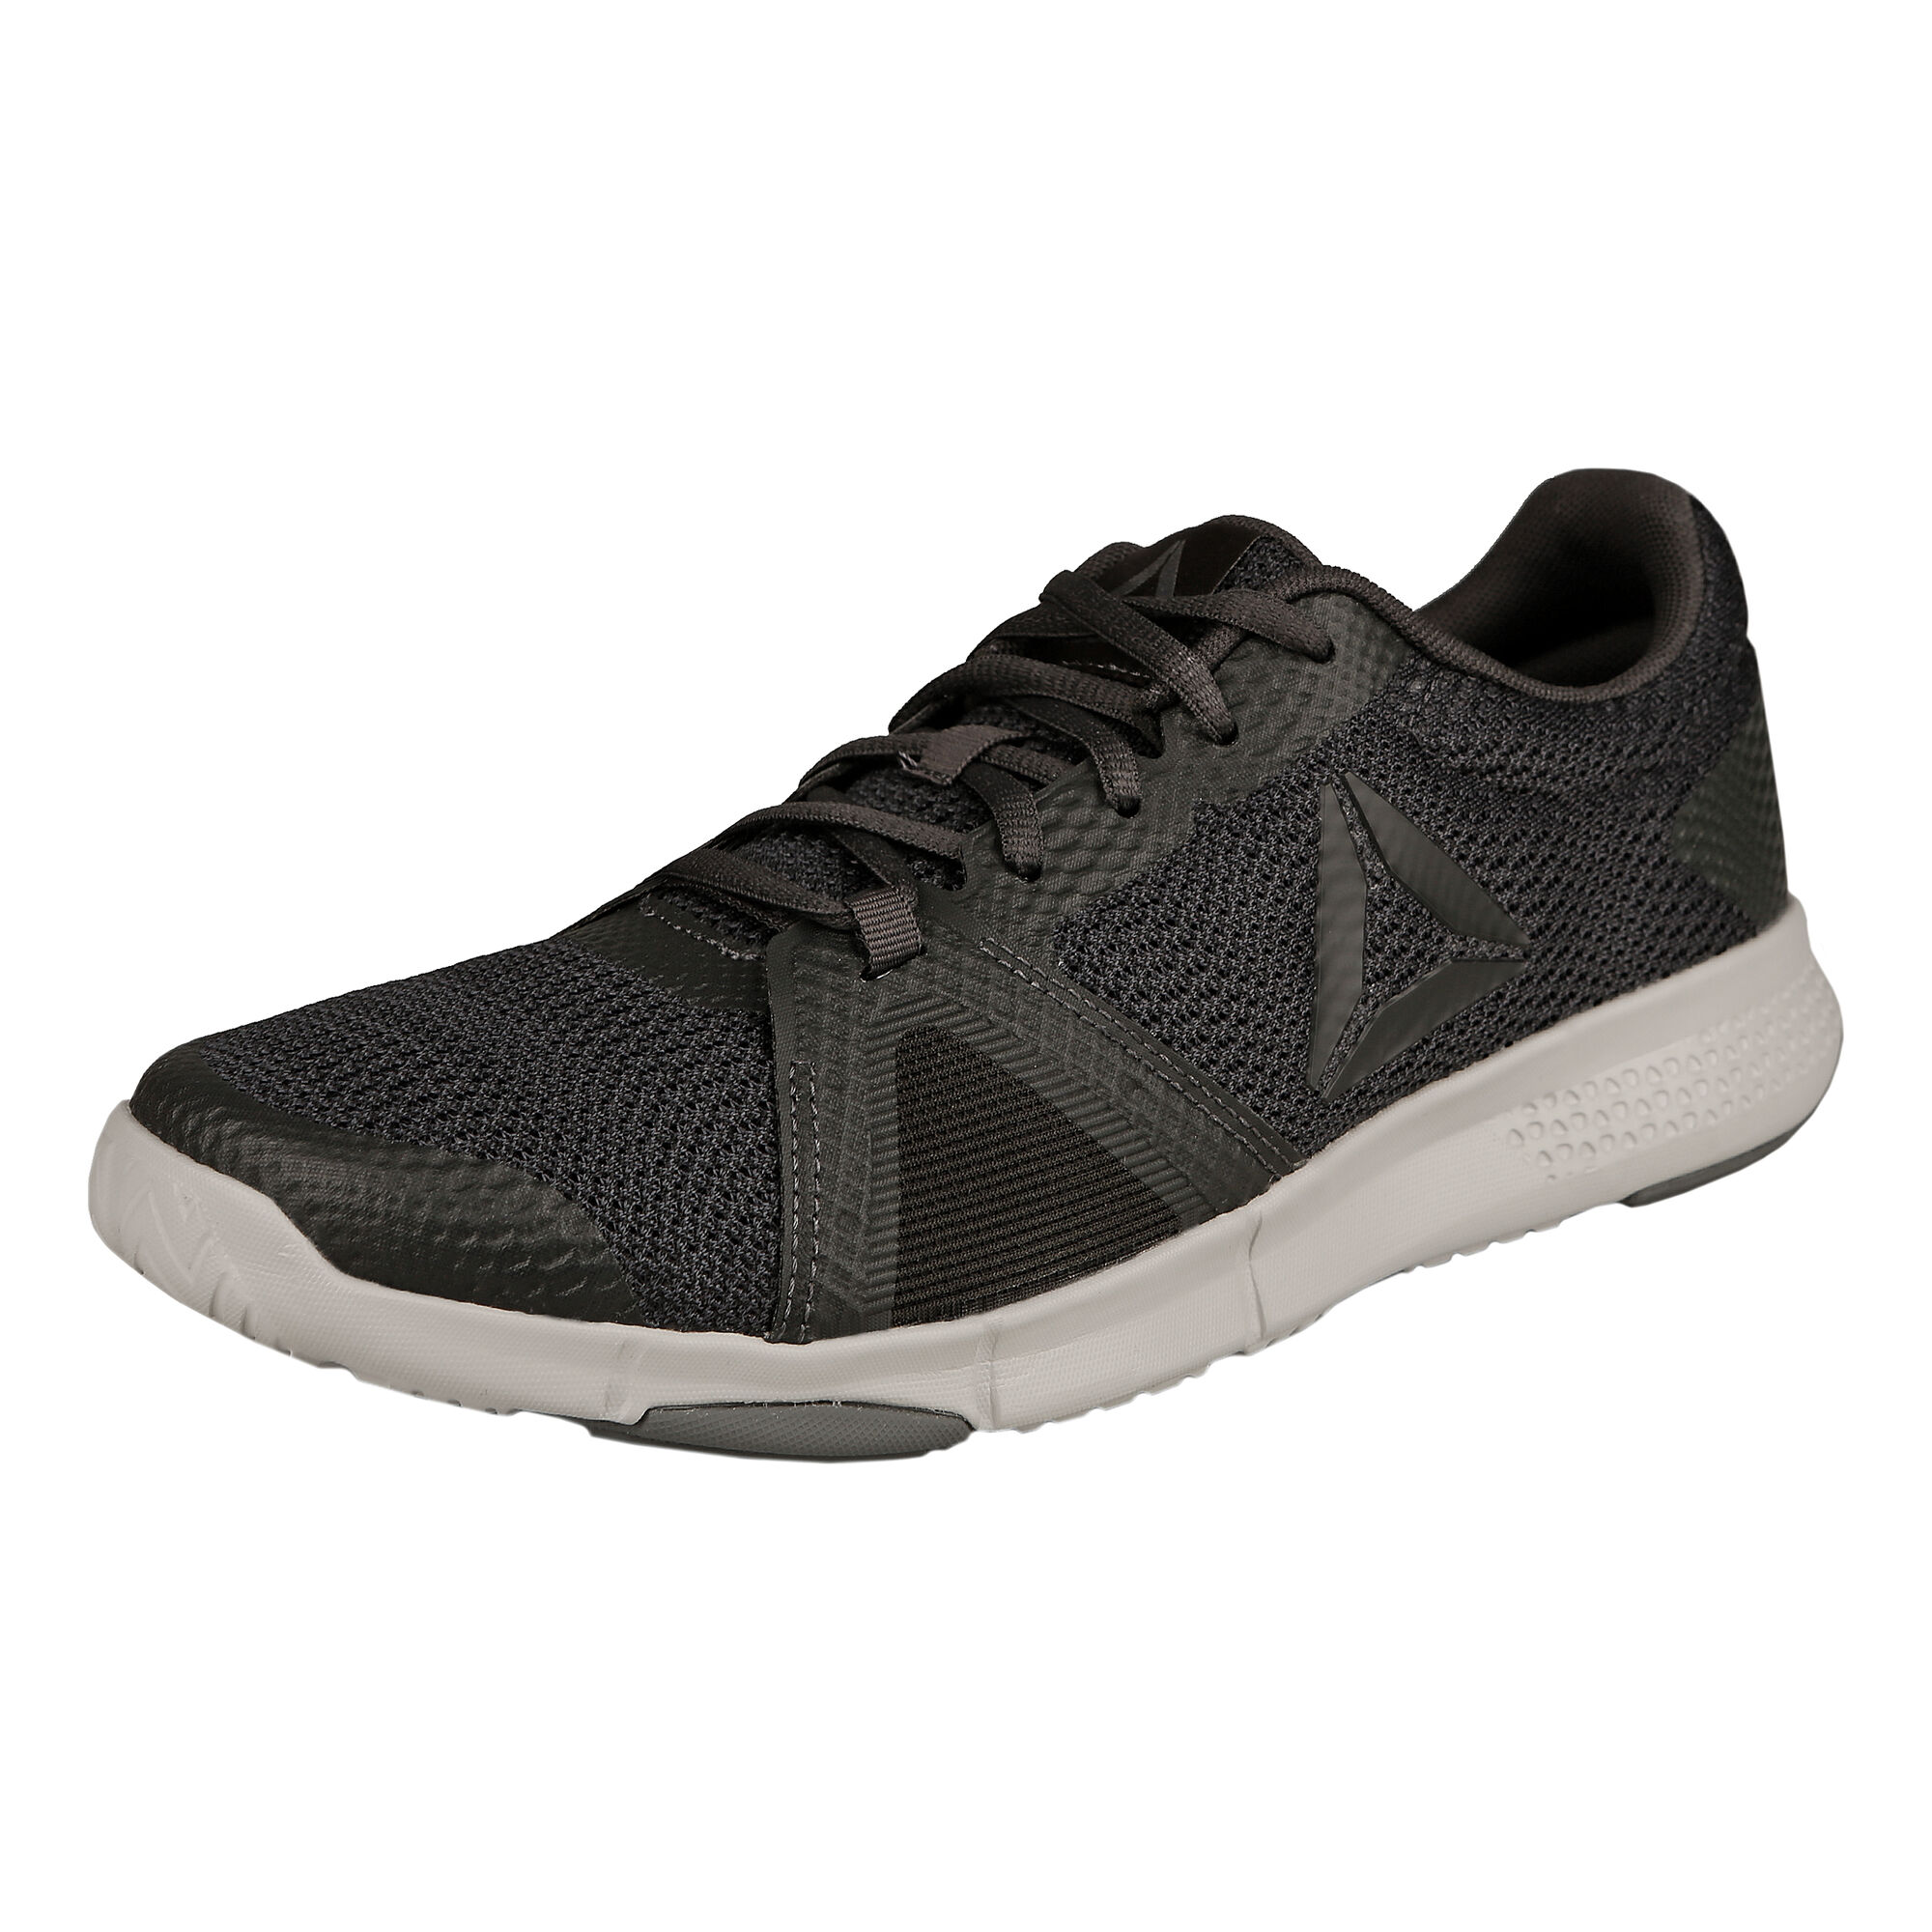 Buy Reebok Flexile Fitness Shoe Men Black, Dark Grey online | Tennis ...